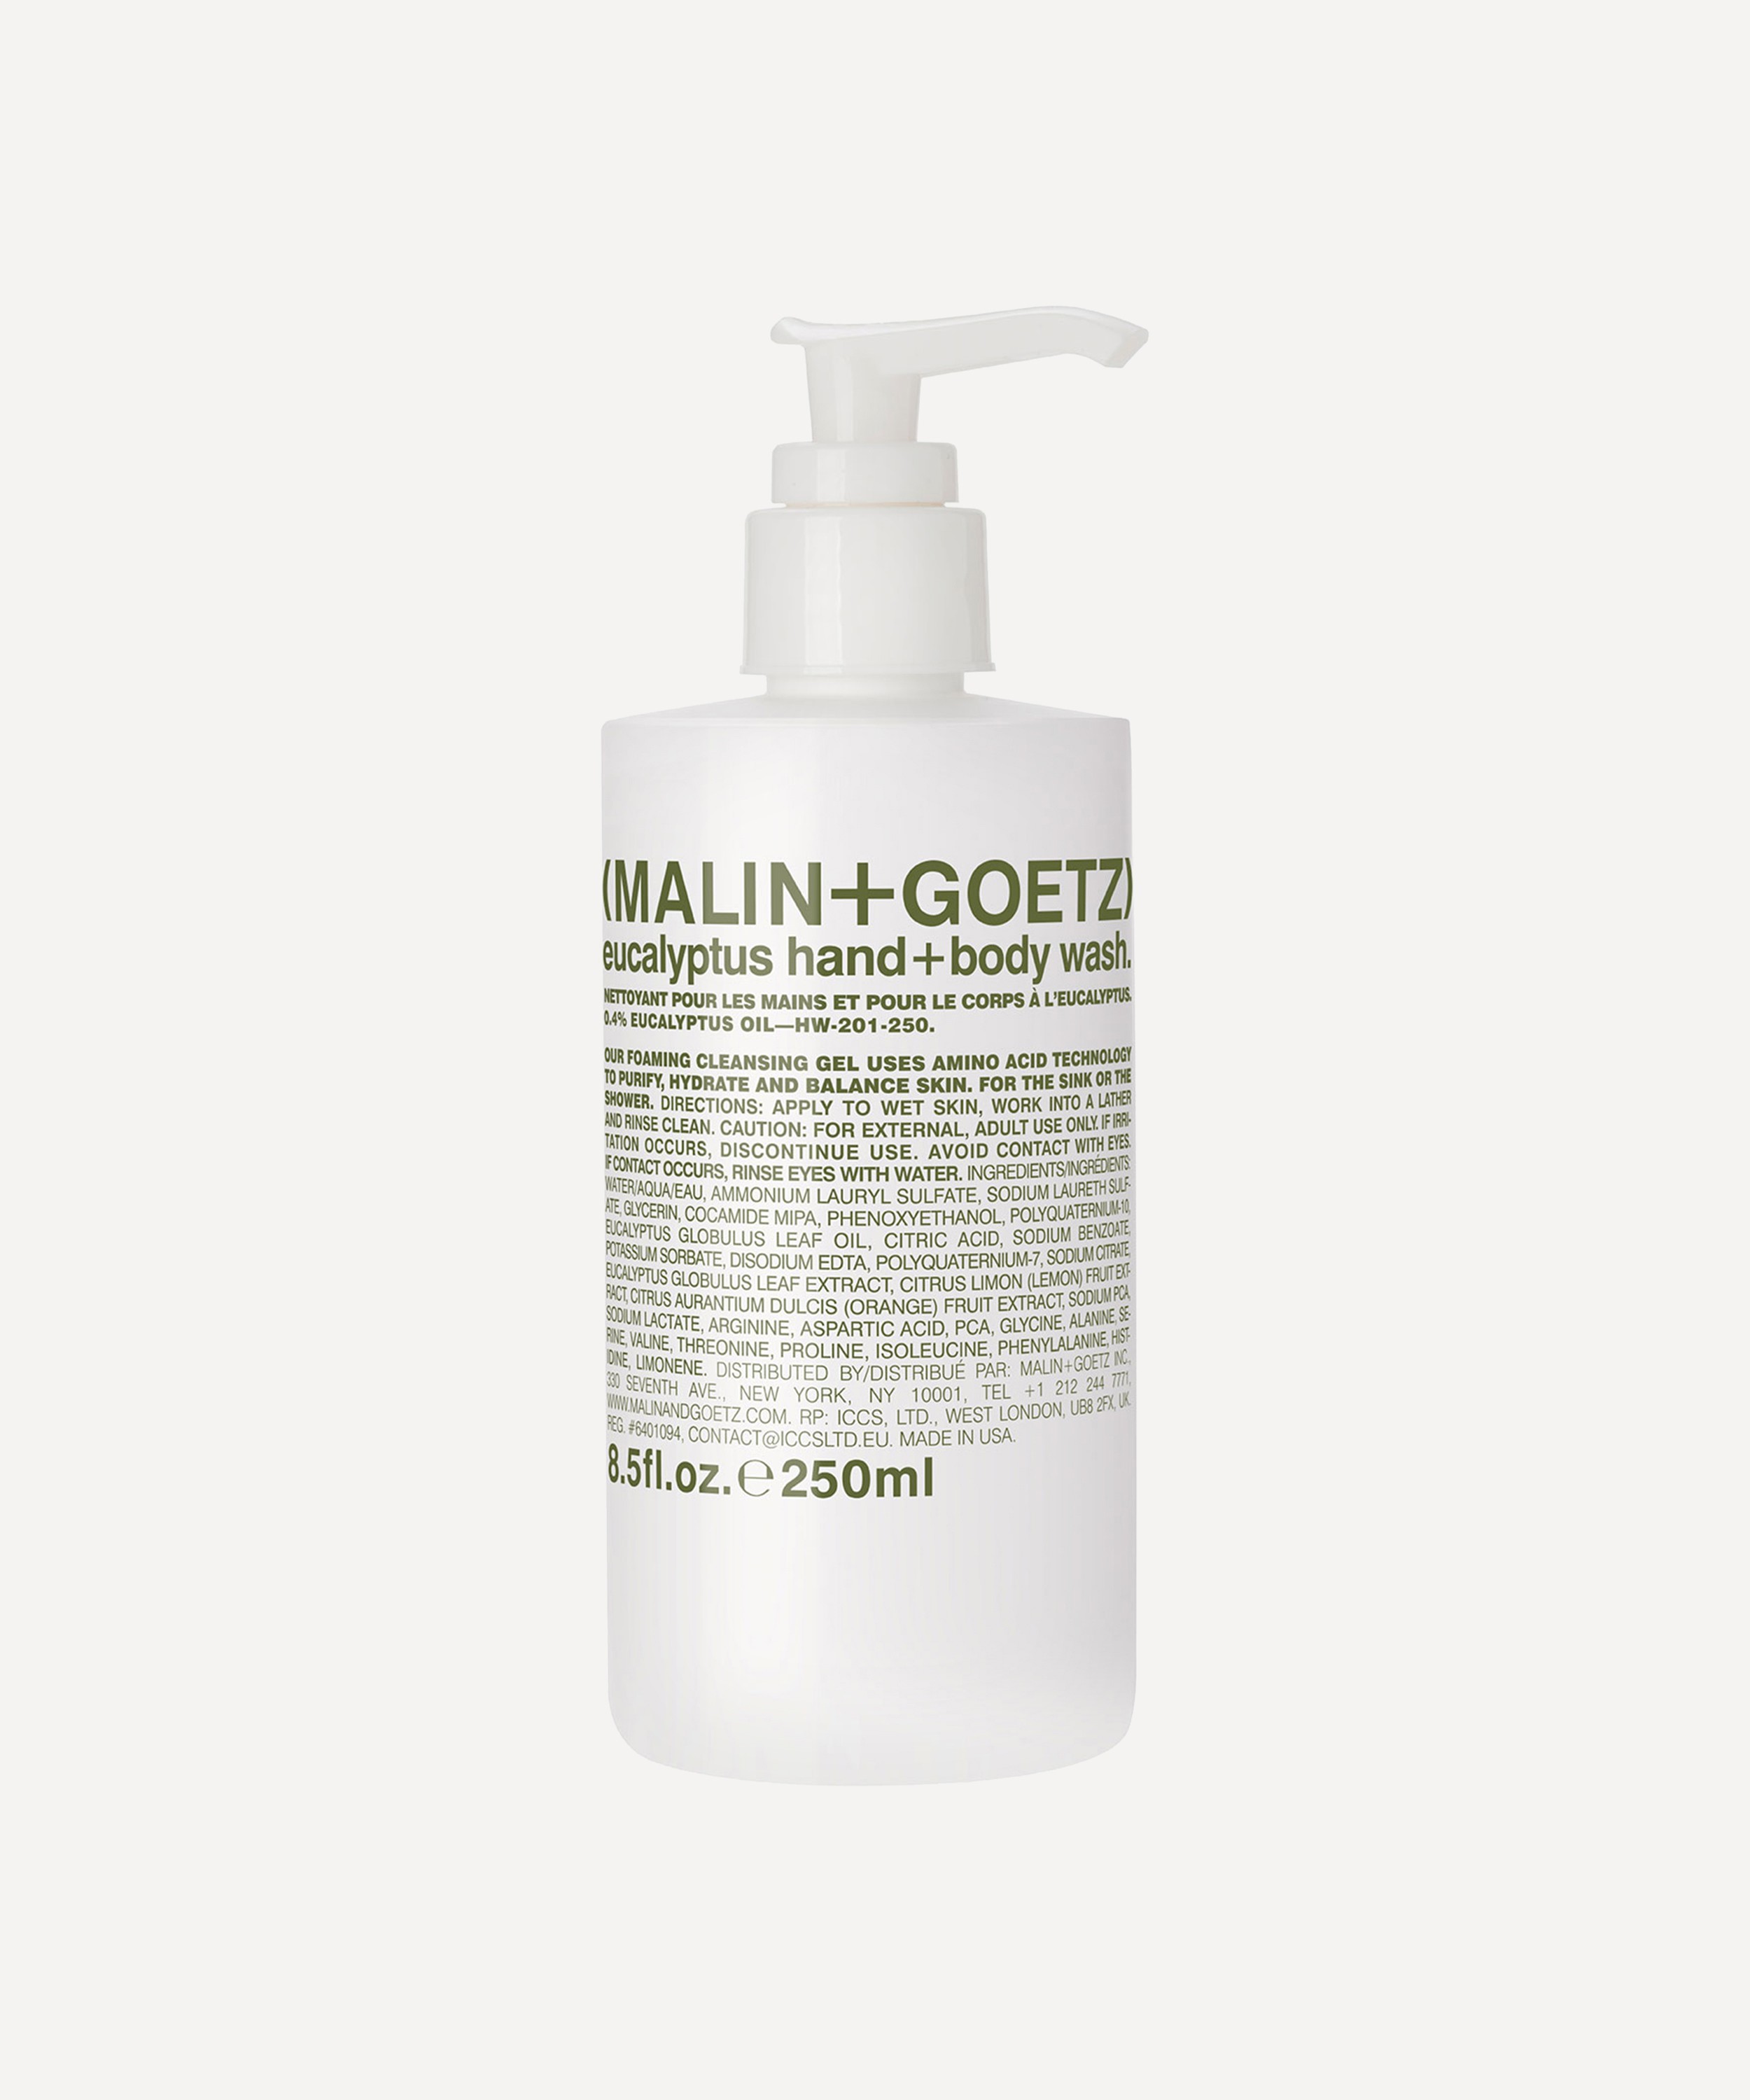 MALIN+GOETZ - Eucalyptus Hand and Body Wash 250ml